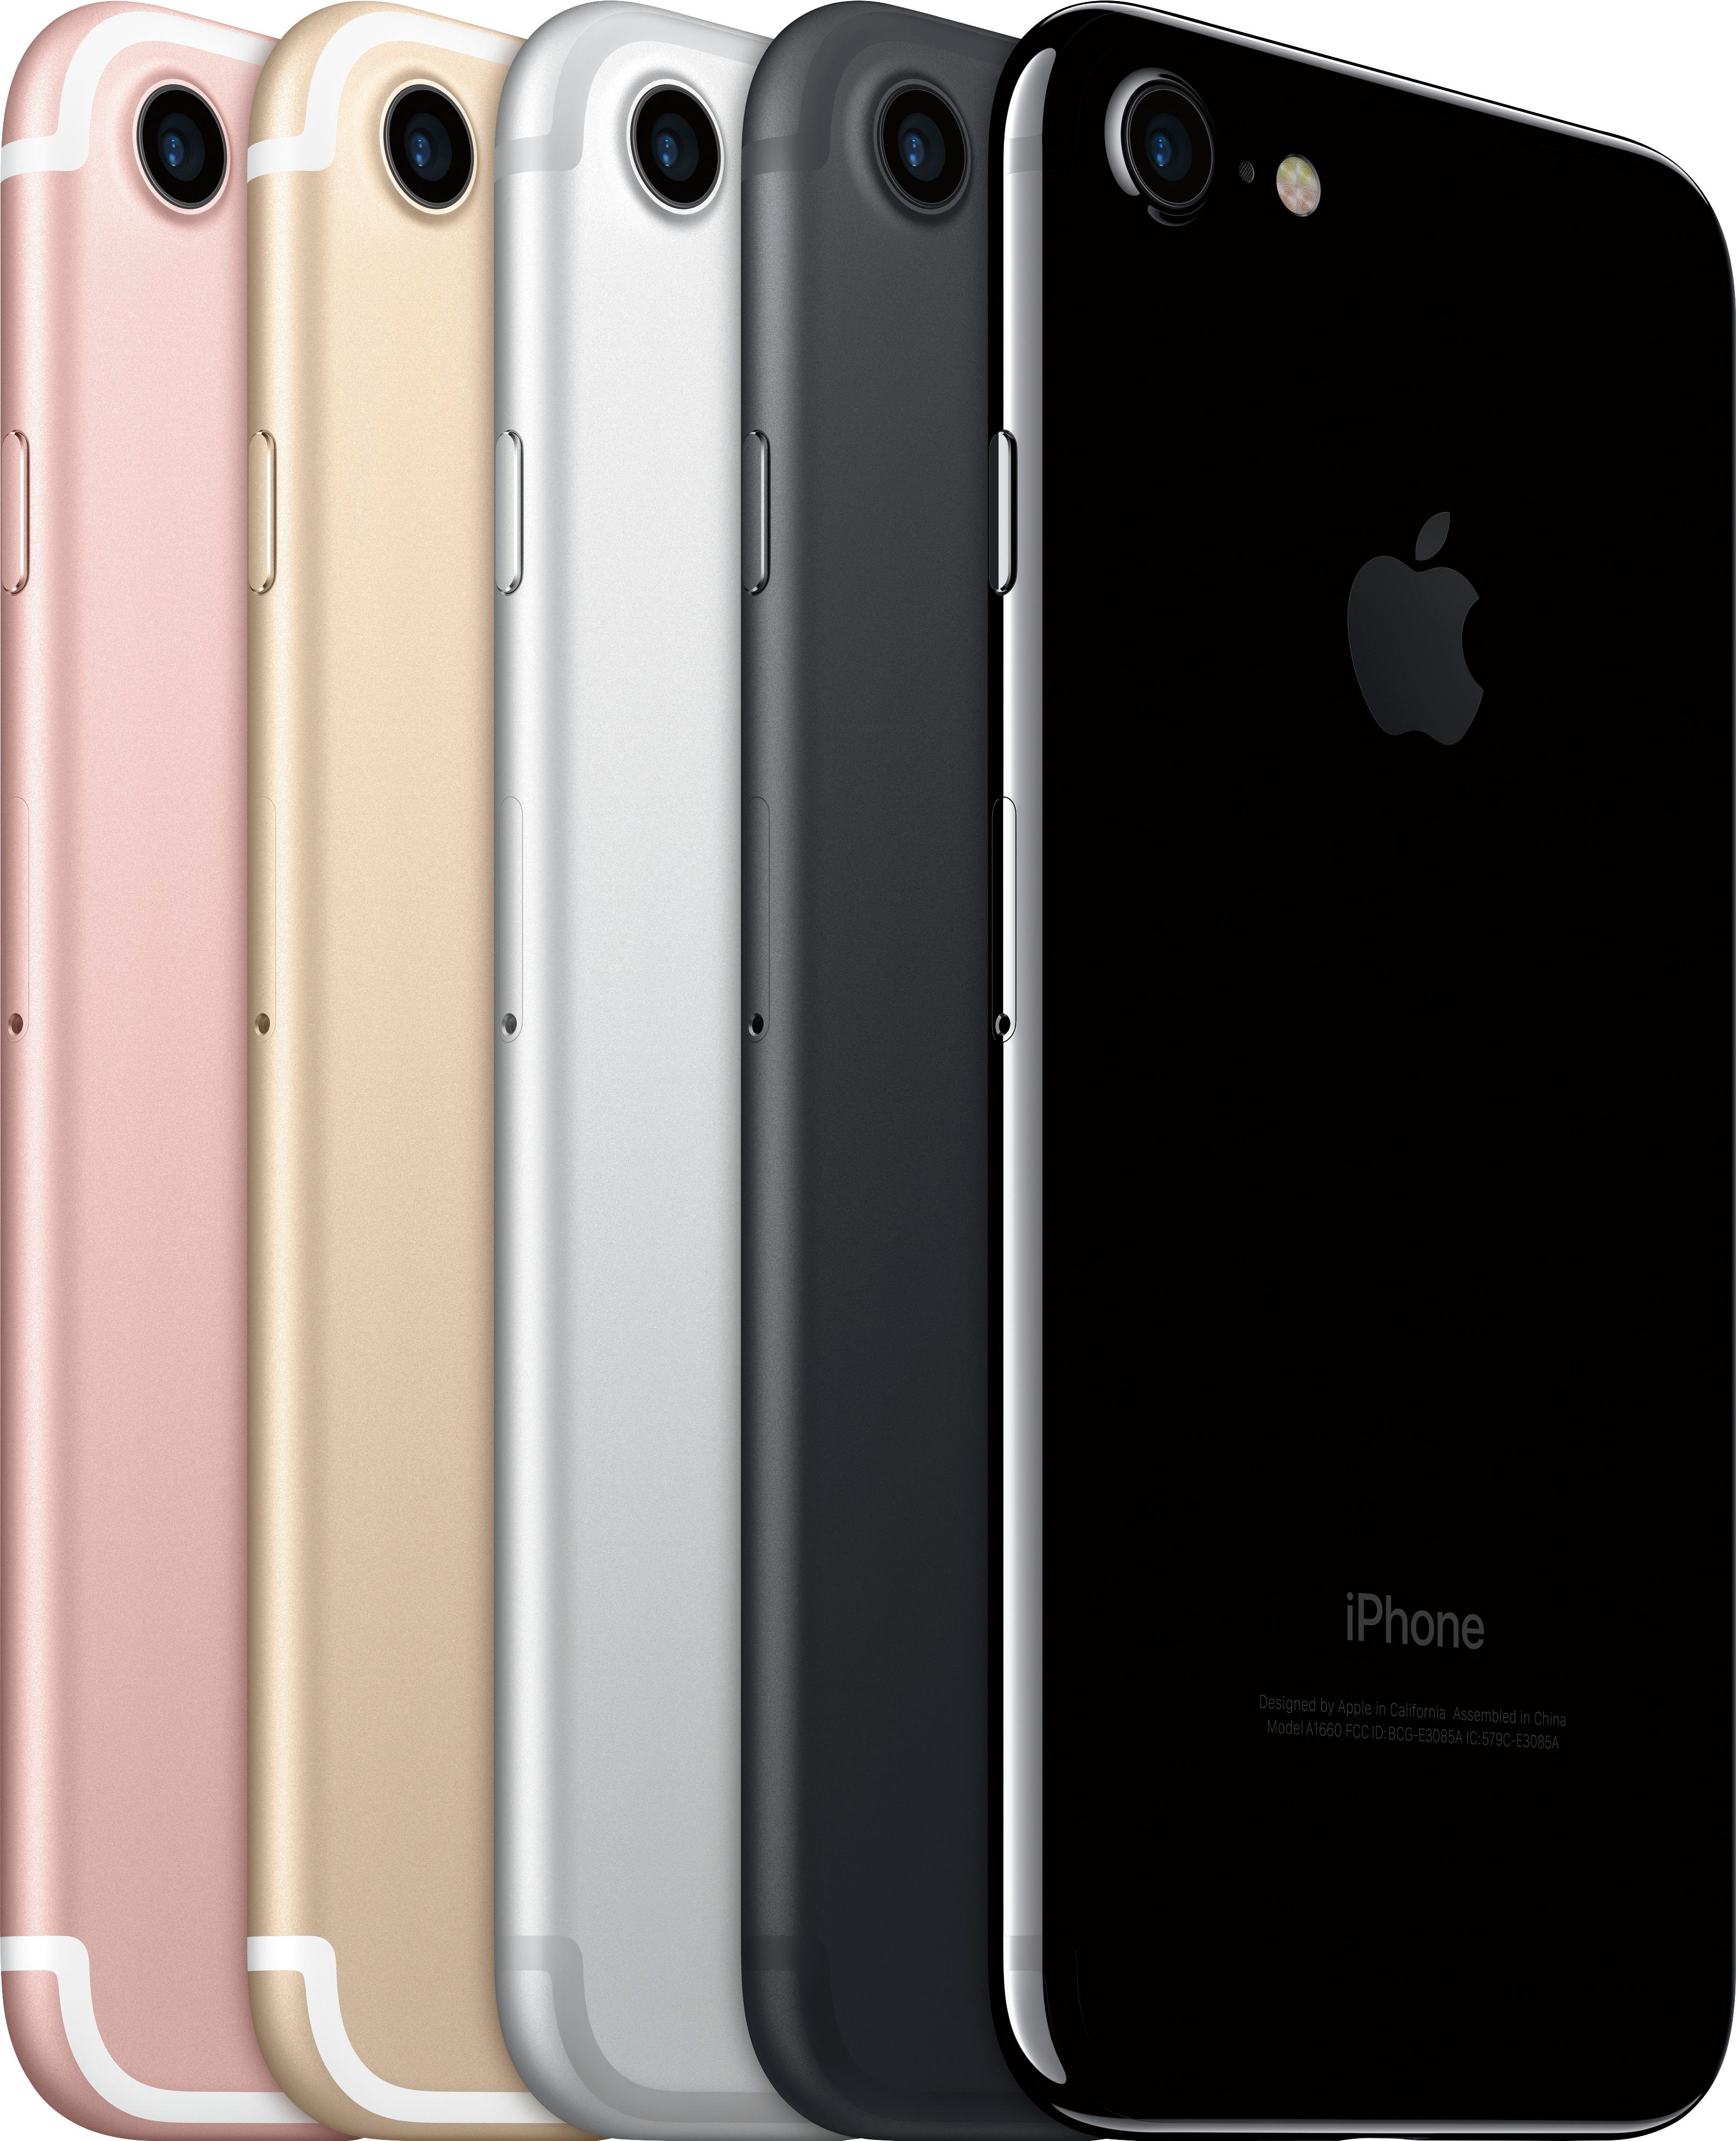 Best Buy: Apple iPhone 7 32GB Black (Verizon) MN8G2LL/A